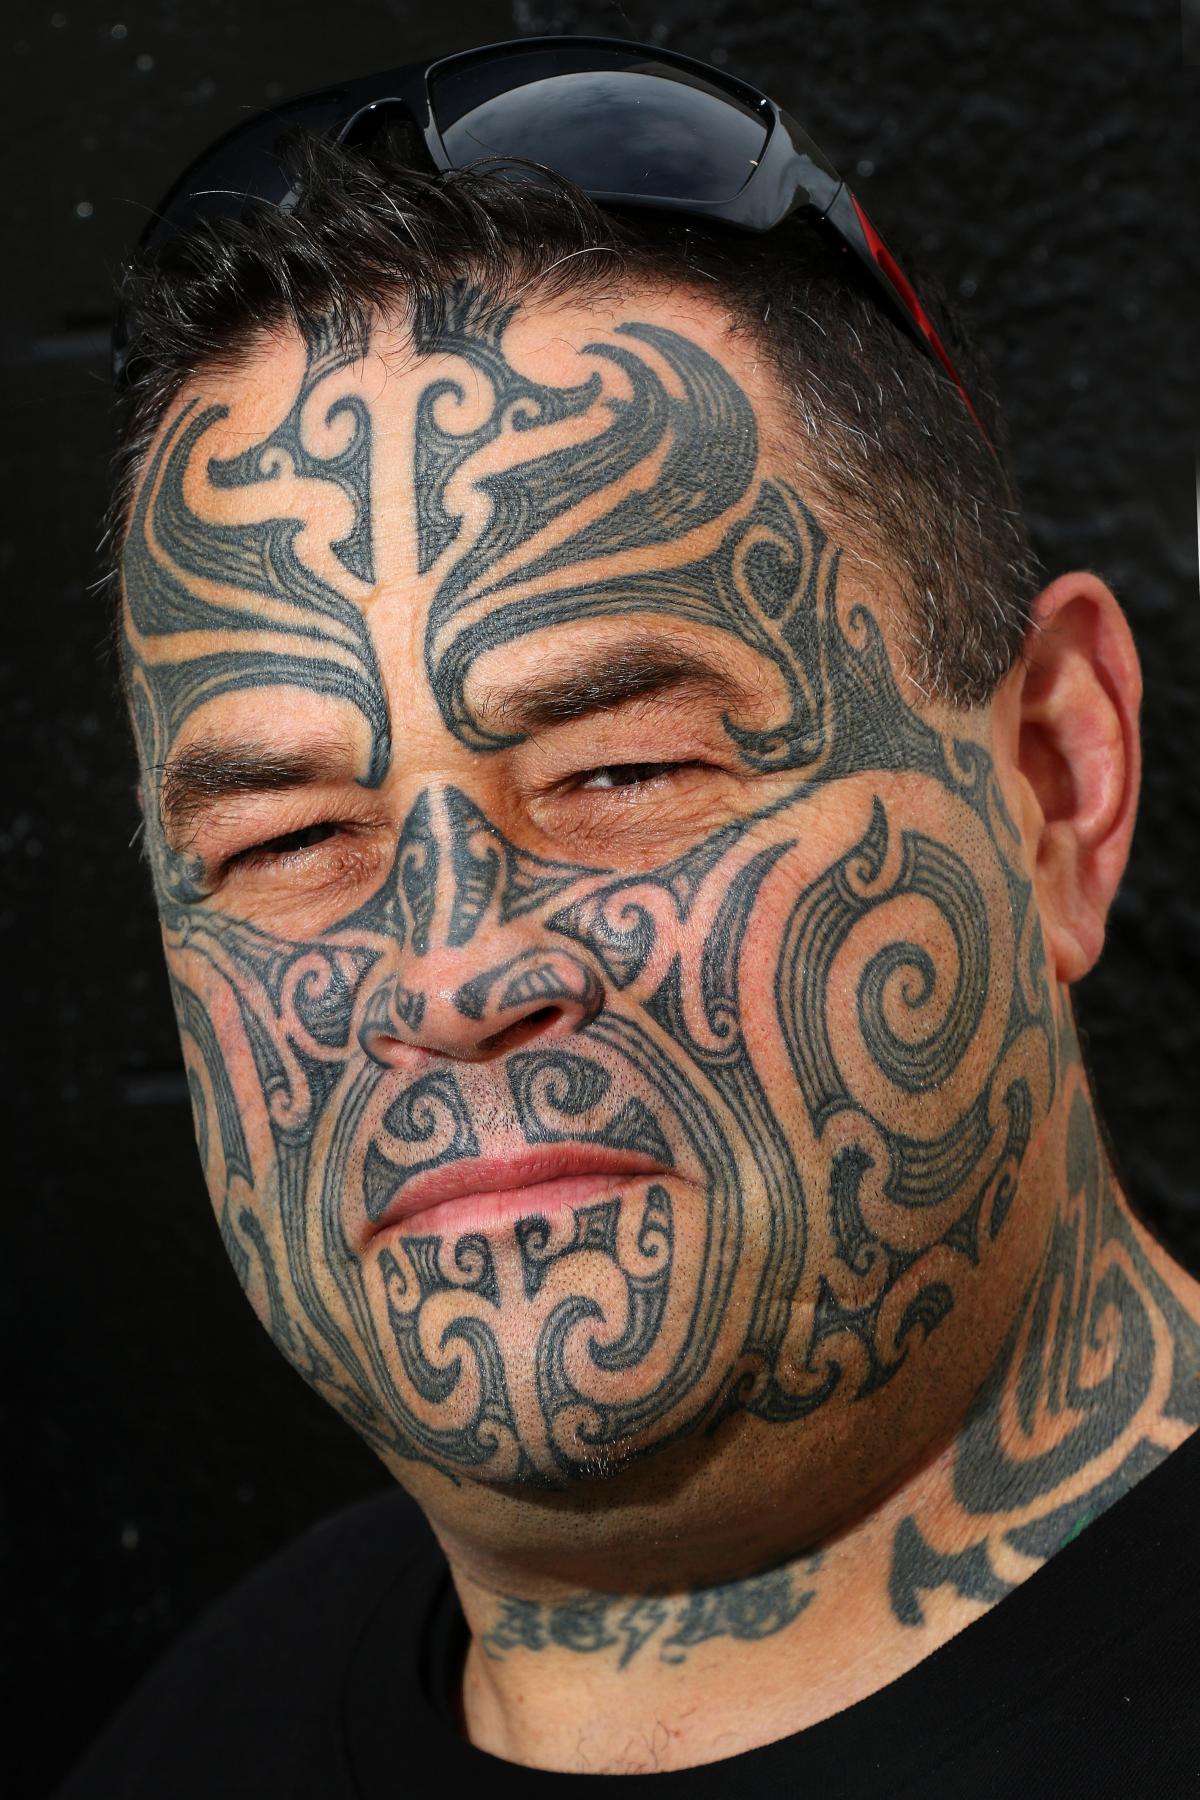 2569 Maori Face Tattoo Images Stock Photos  Vectors  Shutterstock